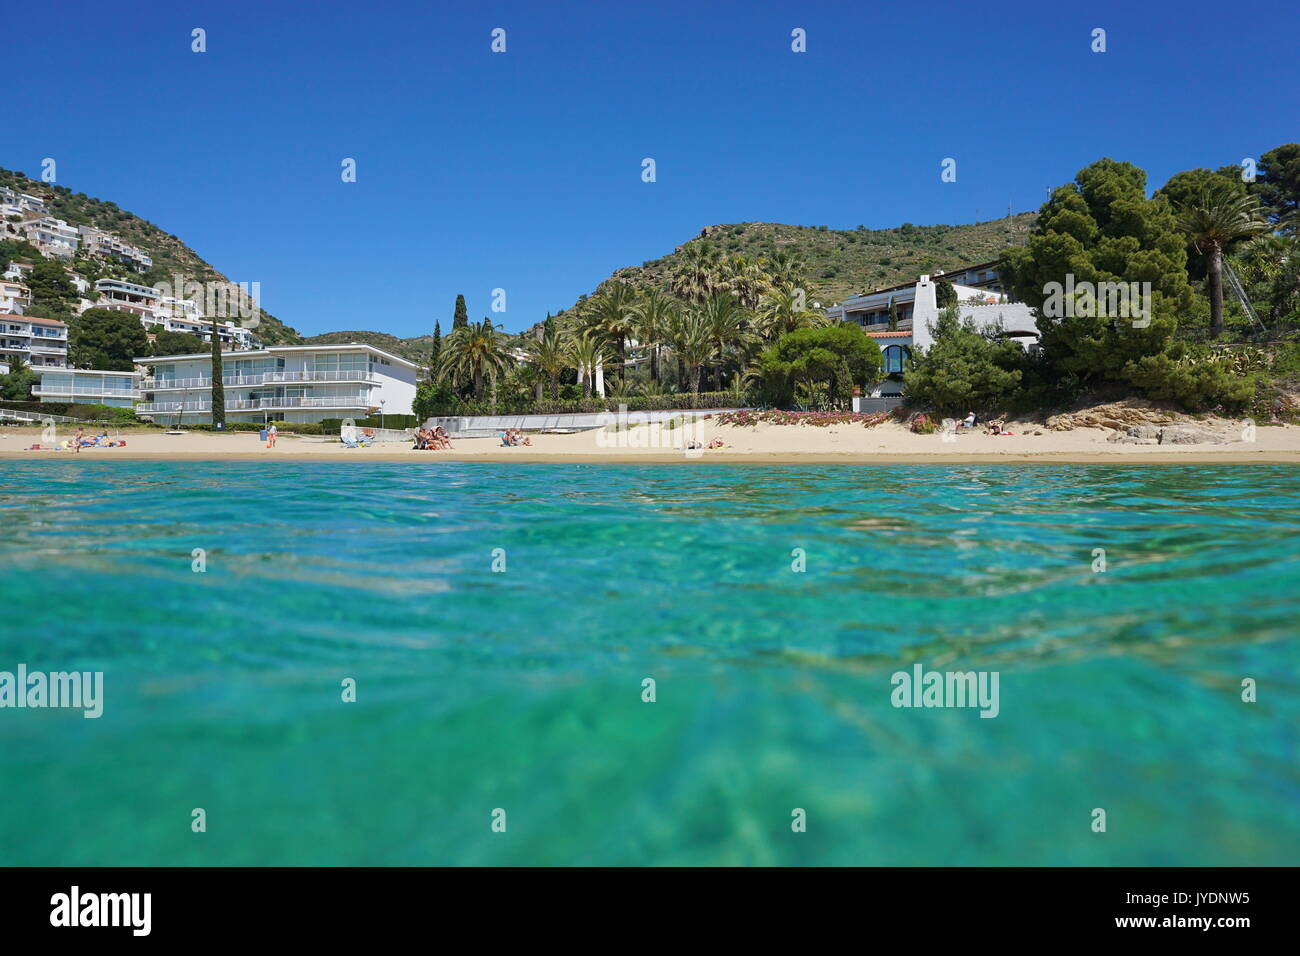 Mediterranean sandy beach coastline, seen from sea surface, Spain, Costa Brava, playa Almadrava, Canyelles Grosses, Roses, Girona, Catalonia Stock Photo